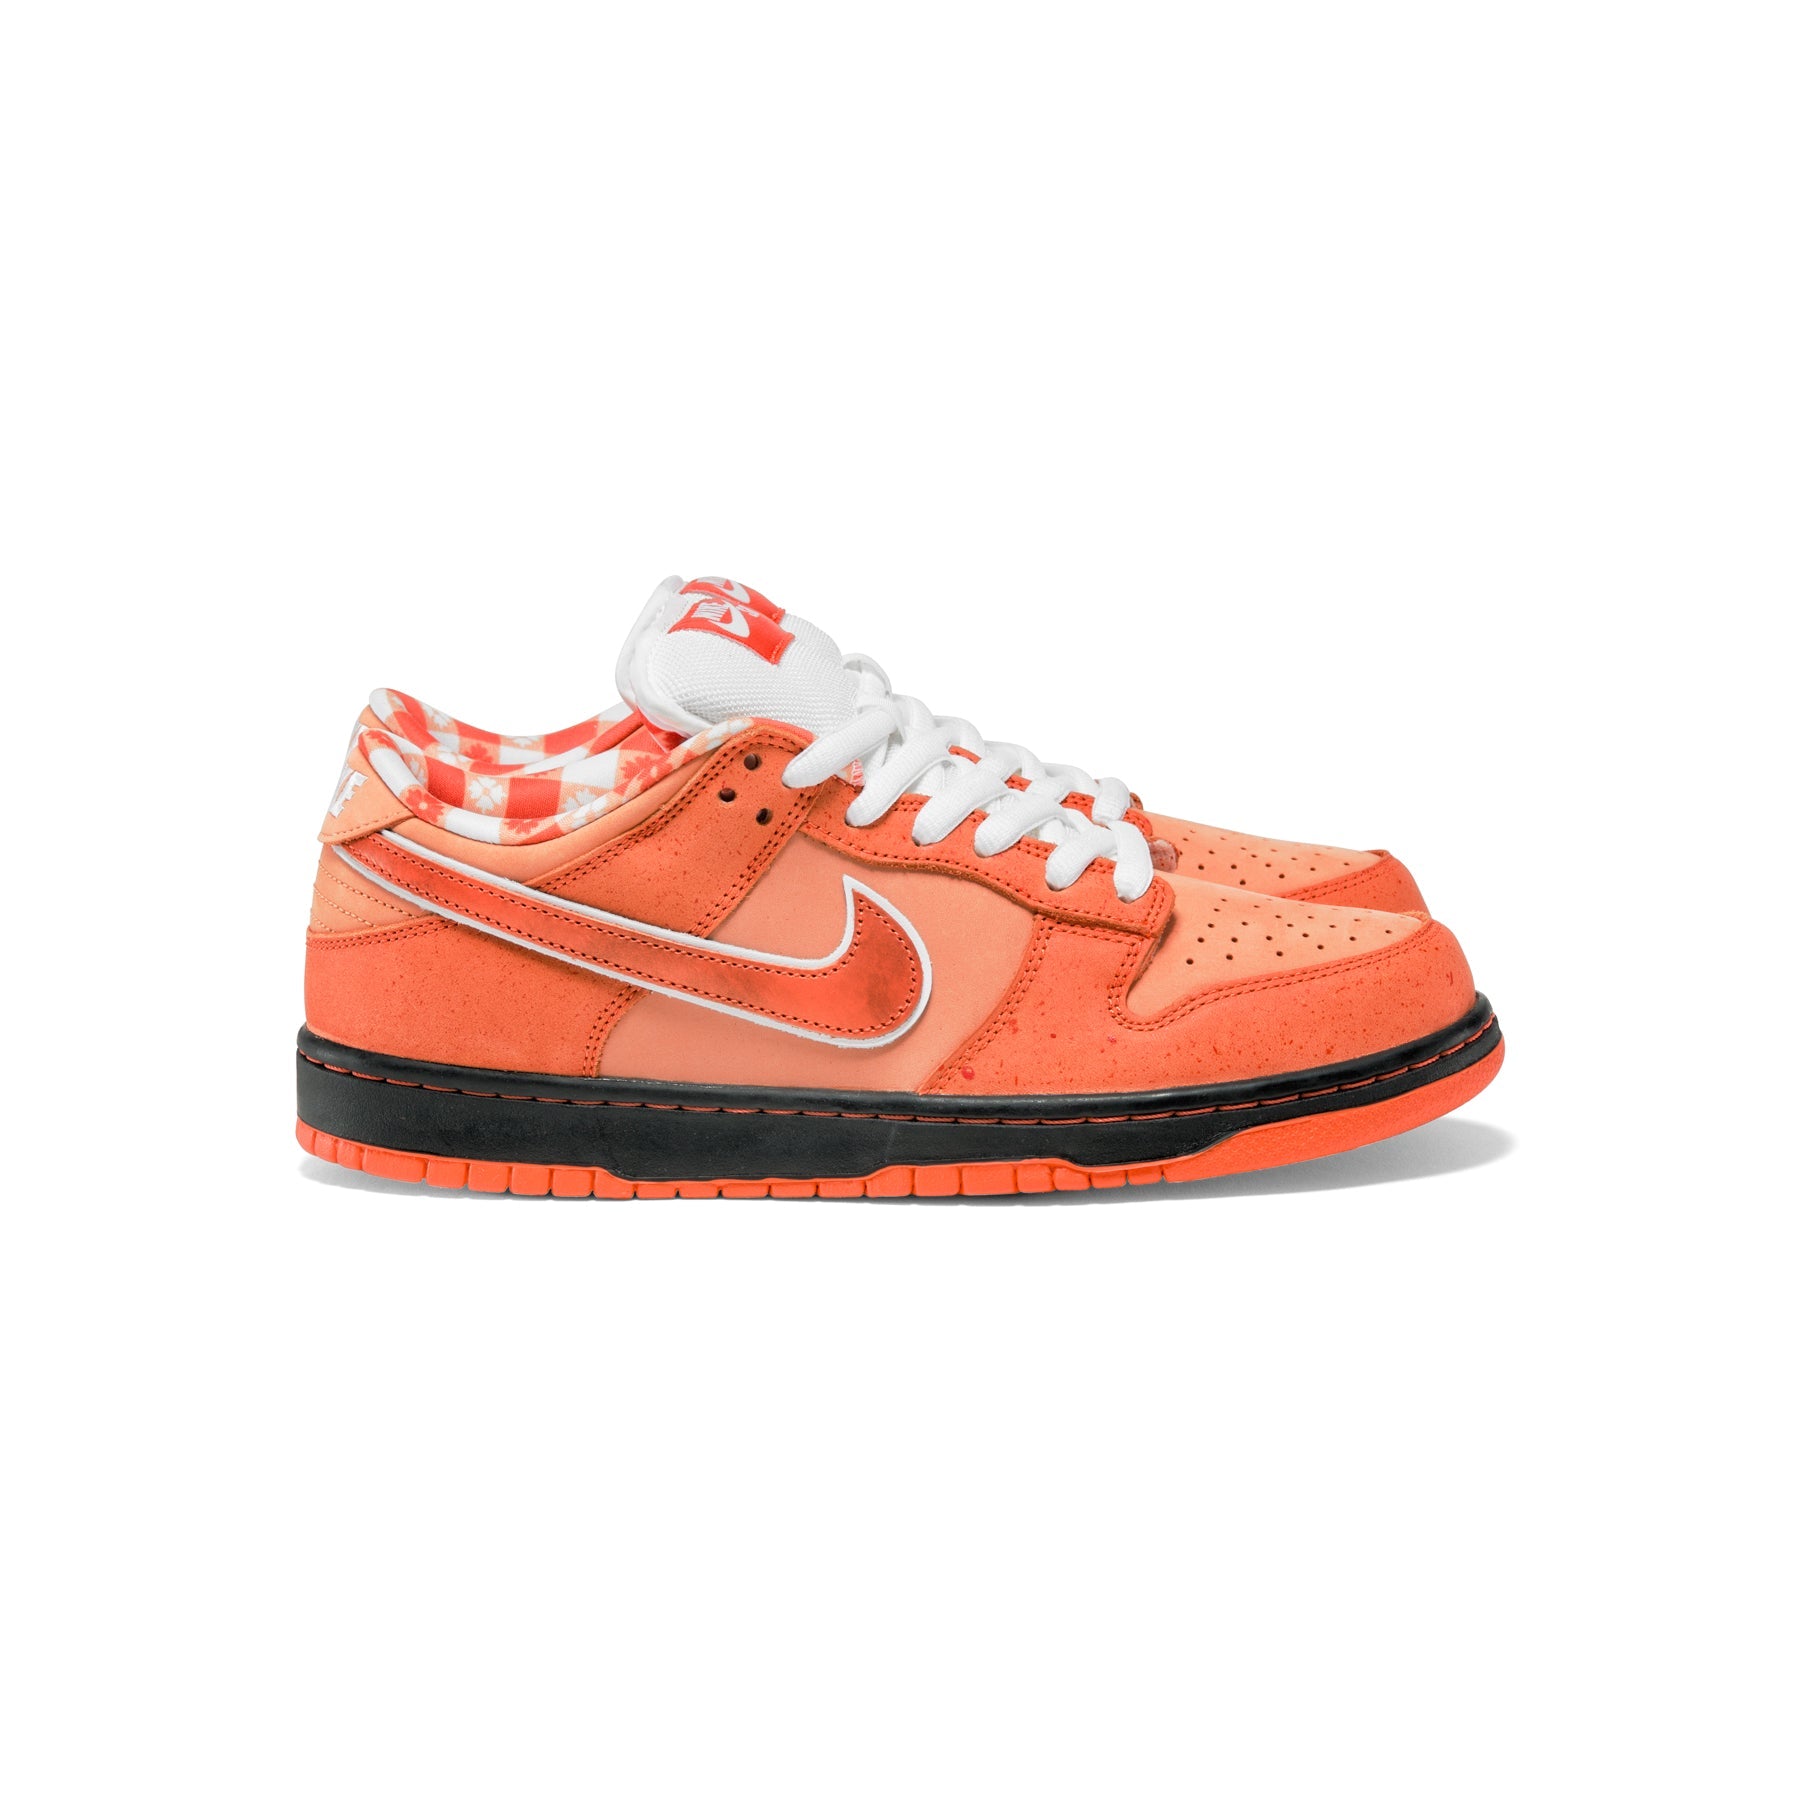 Concepts x Nike SB Dunk Low (Orange Frost/Electro Orange/White) Online